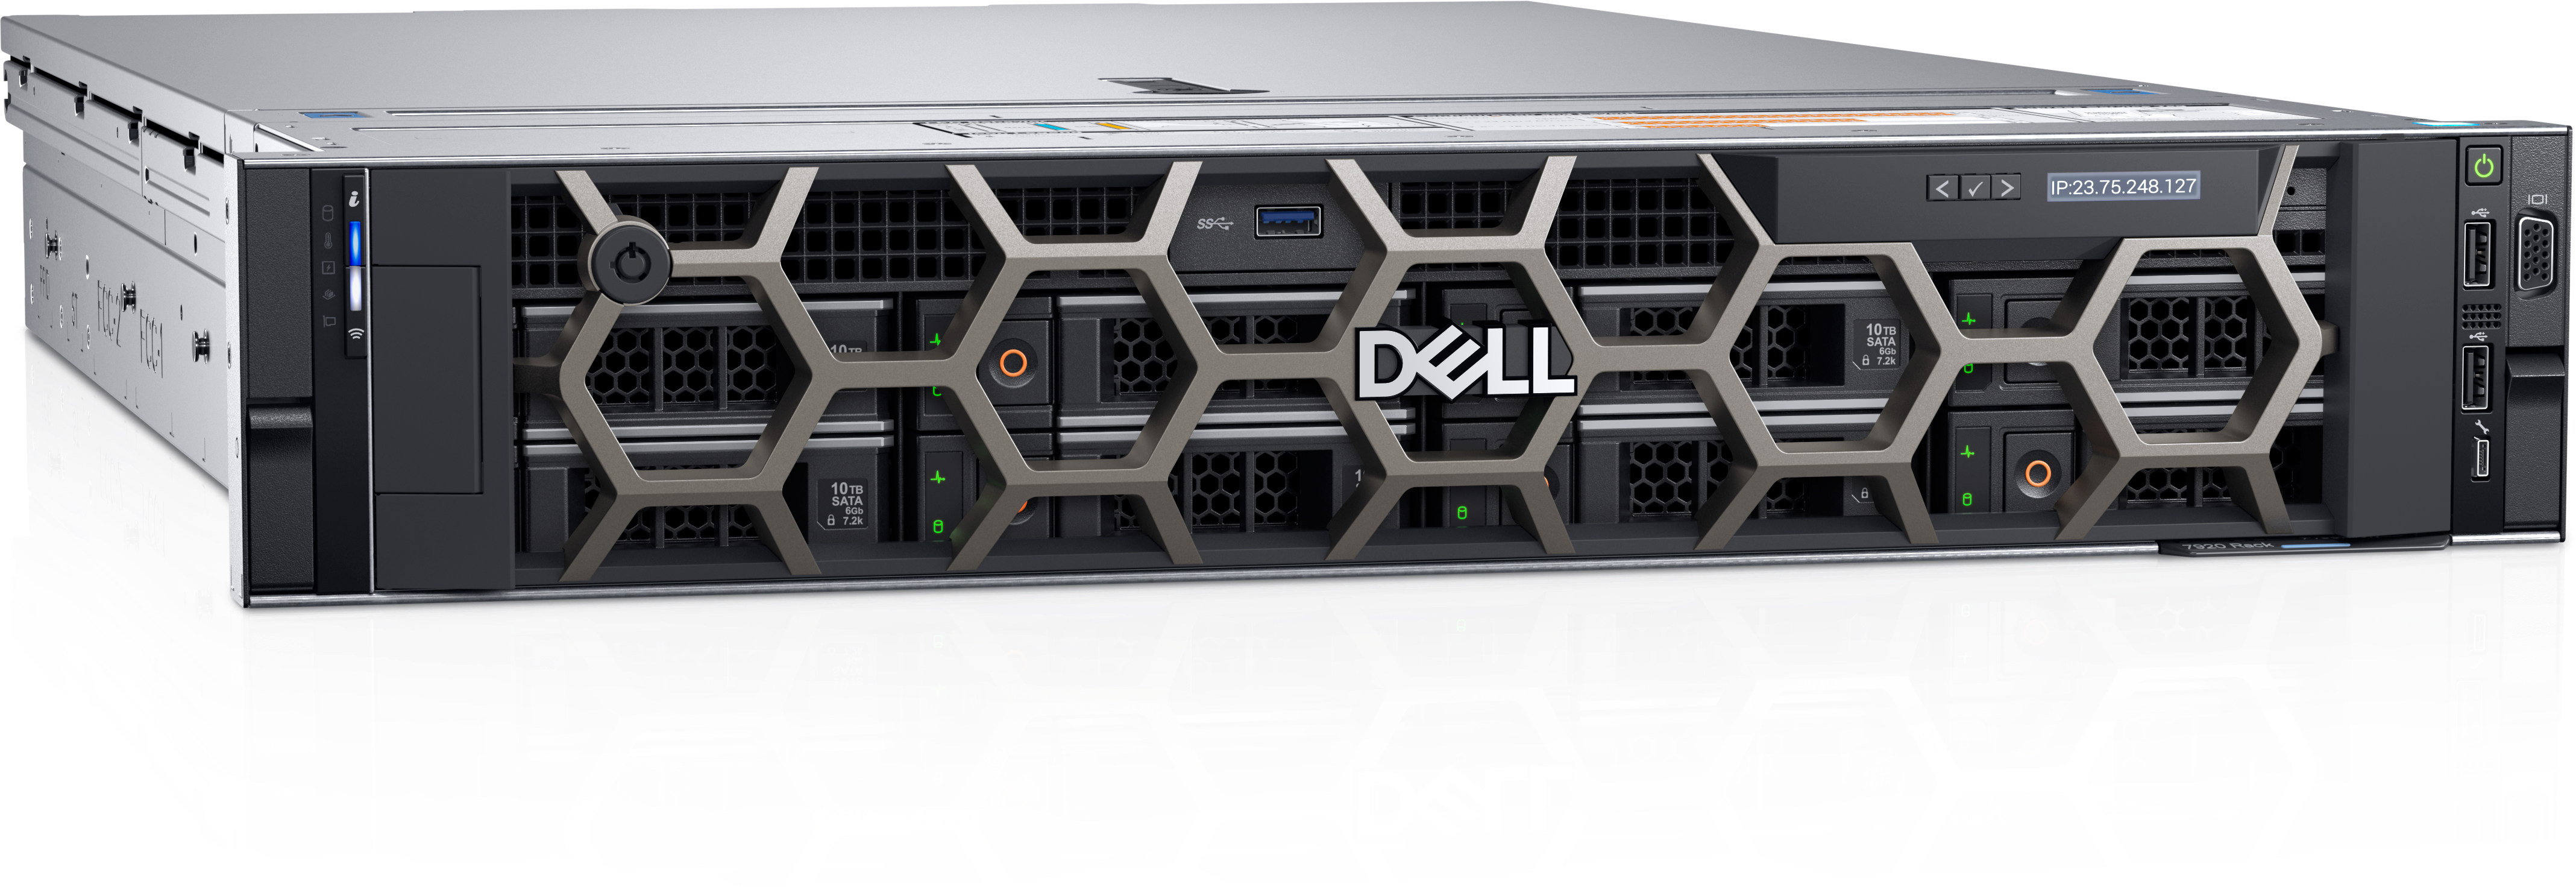 Precision 7920 Rack Workstation with Intel Xeon Processor | Dell USA